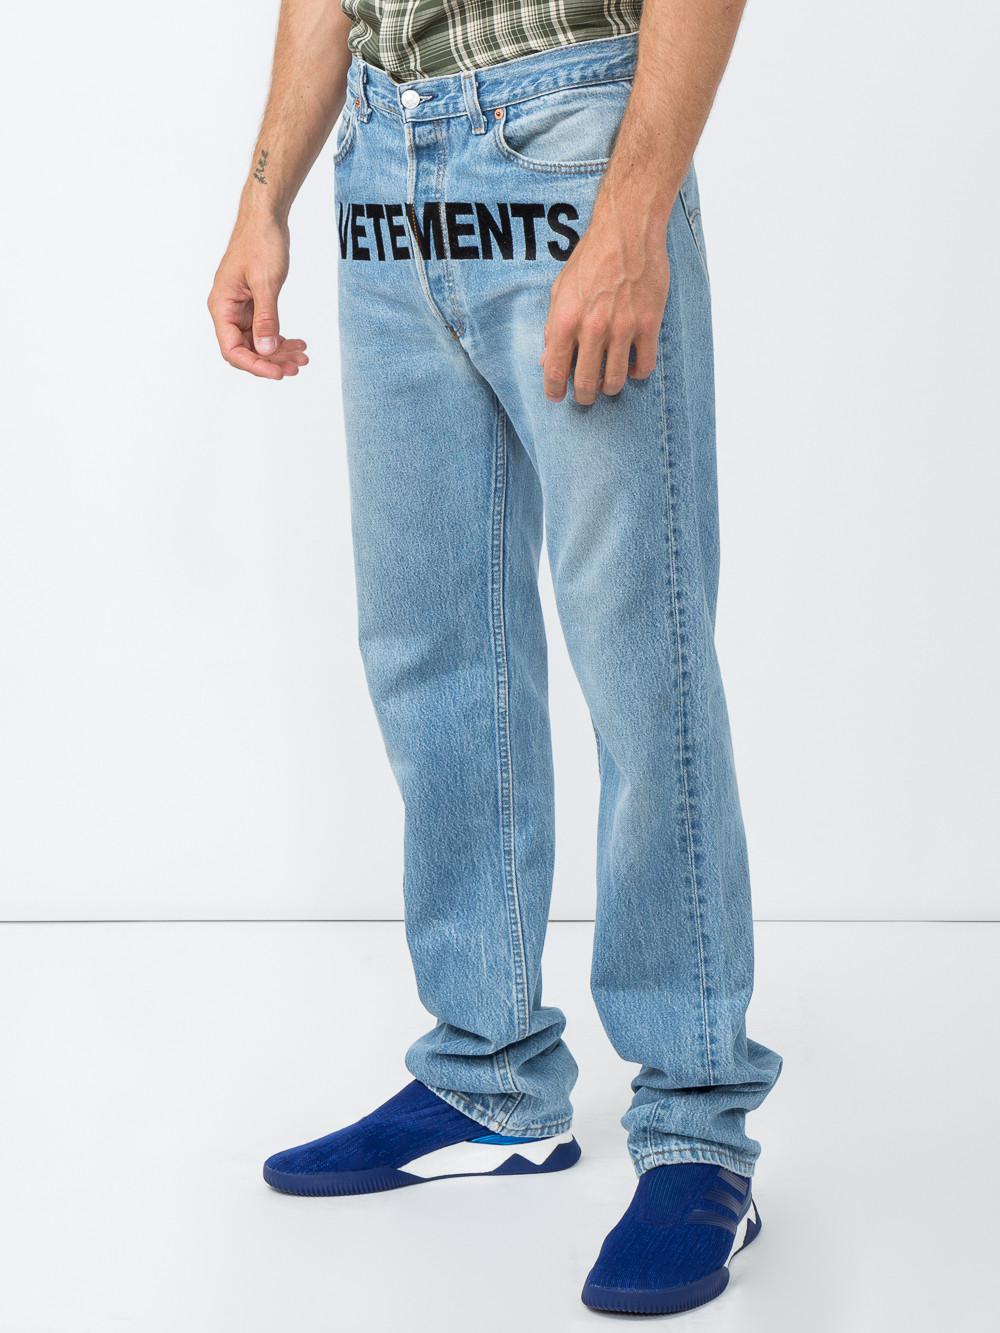 Vetements Denim X Levi's Logo Jeans in Blue for Men - Lyst